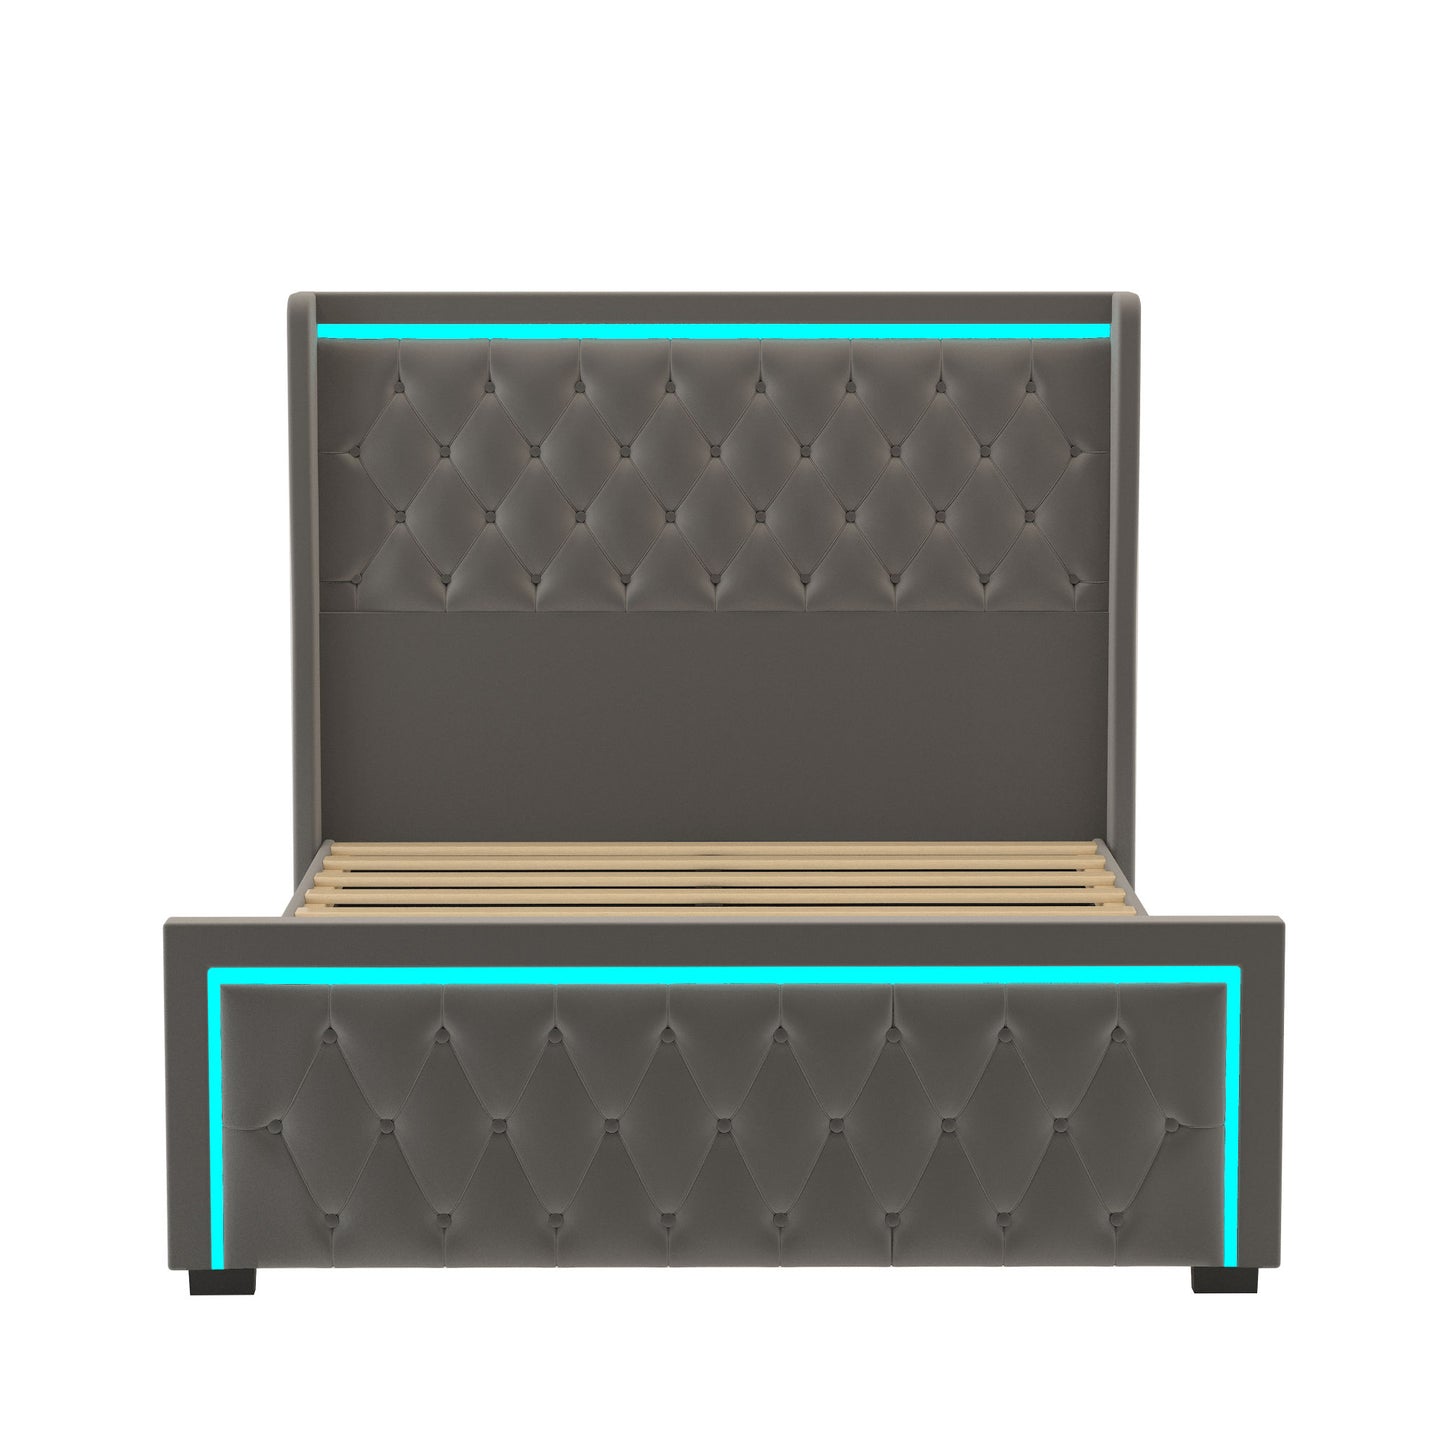 velvet upholstered bed with adjustable colorful led light decorative headboard